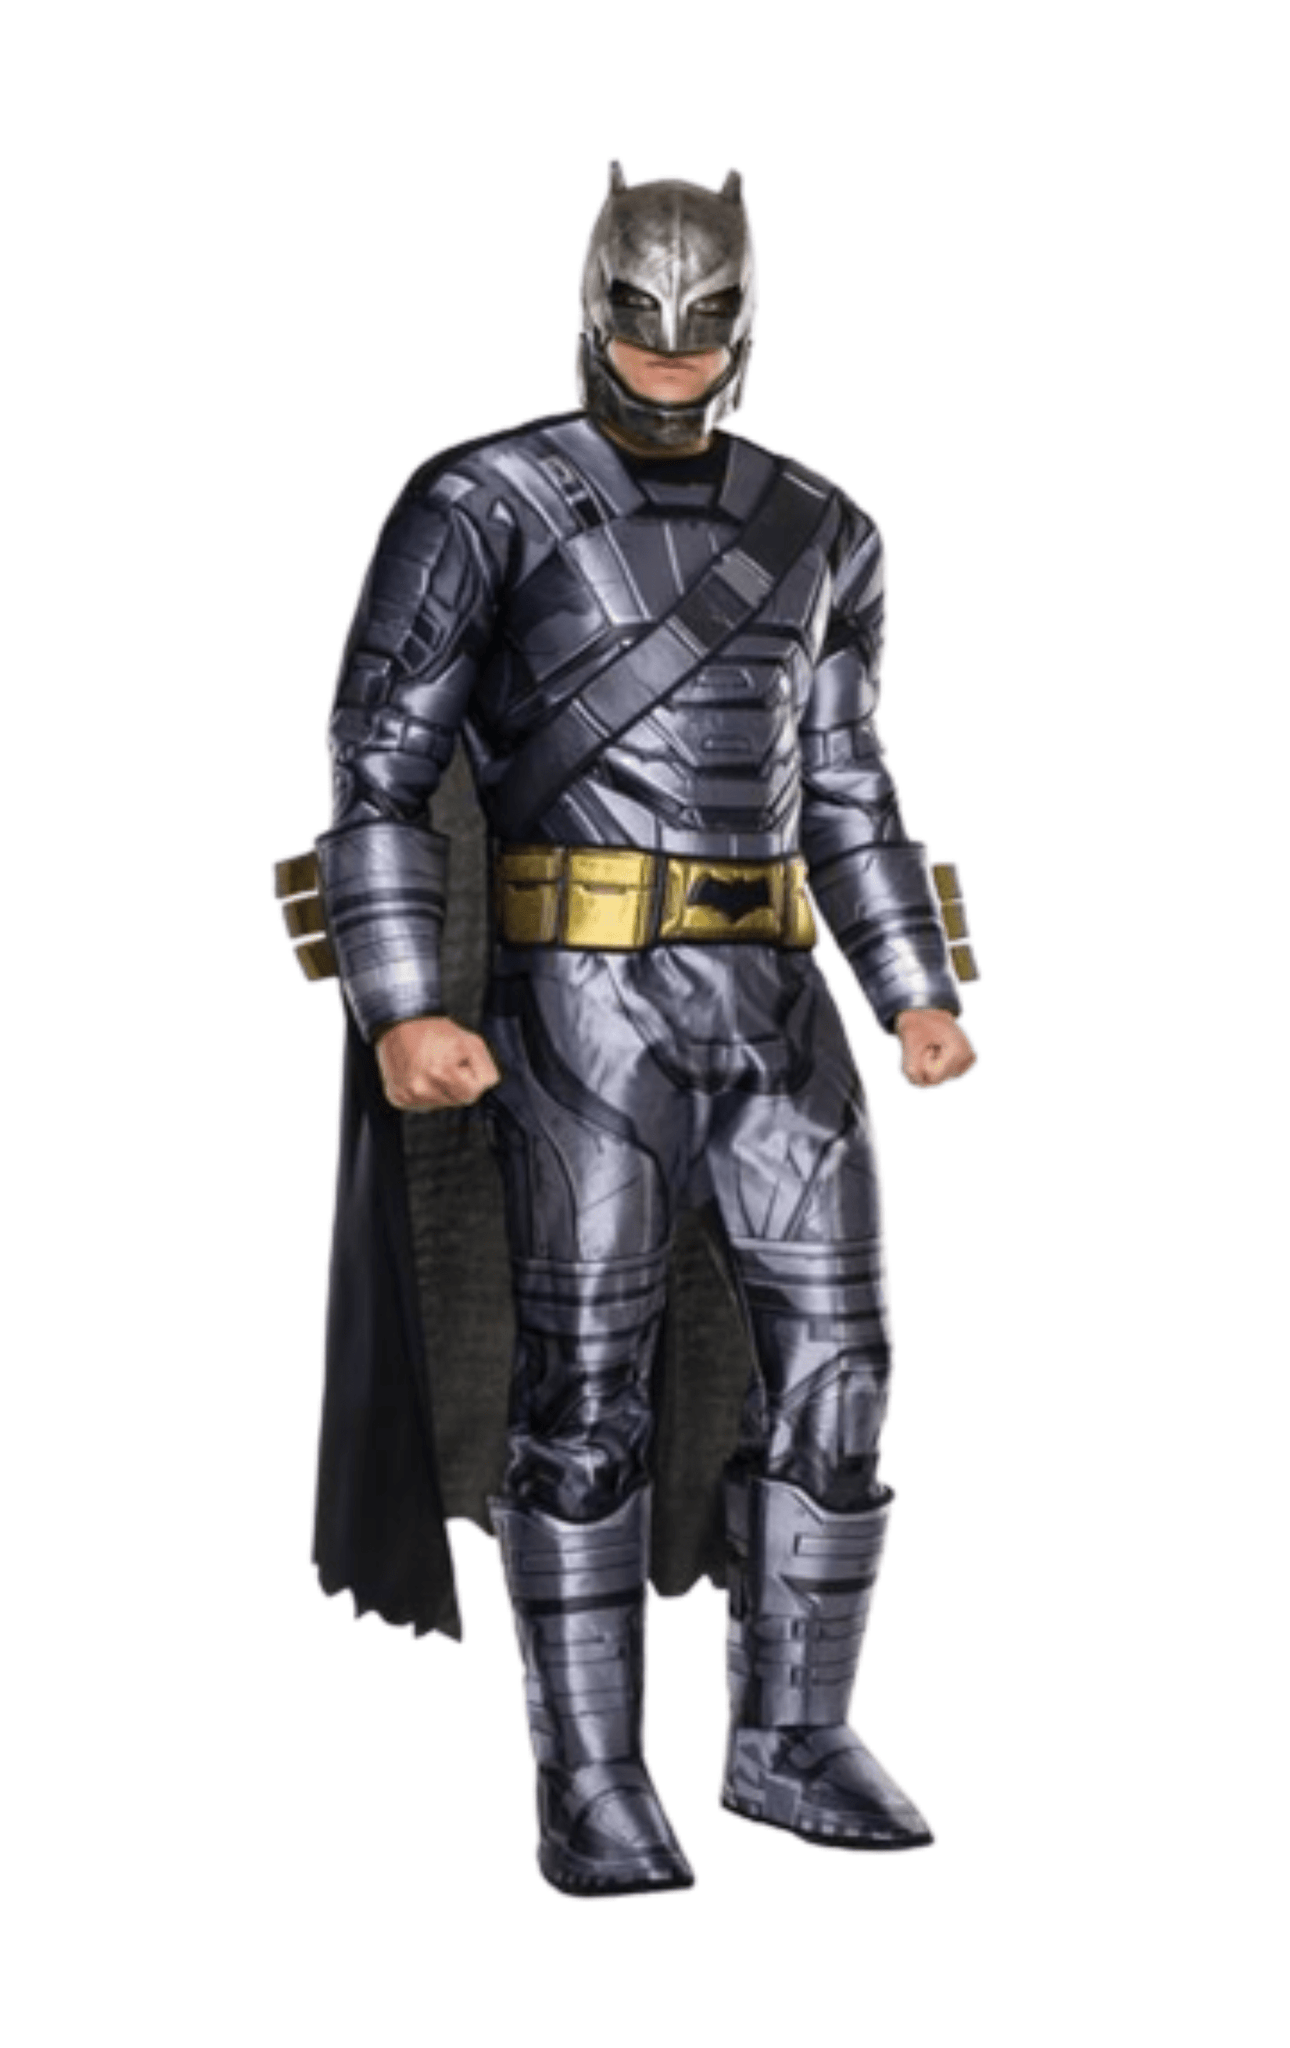 Doj Batman Armored Adult Costume